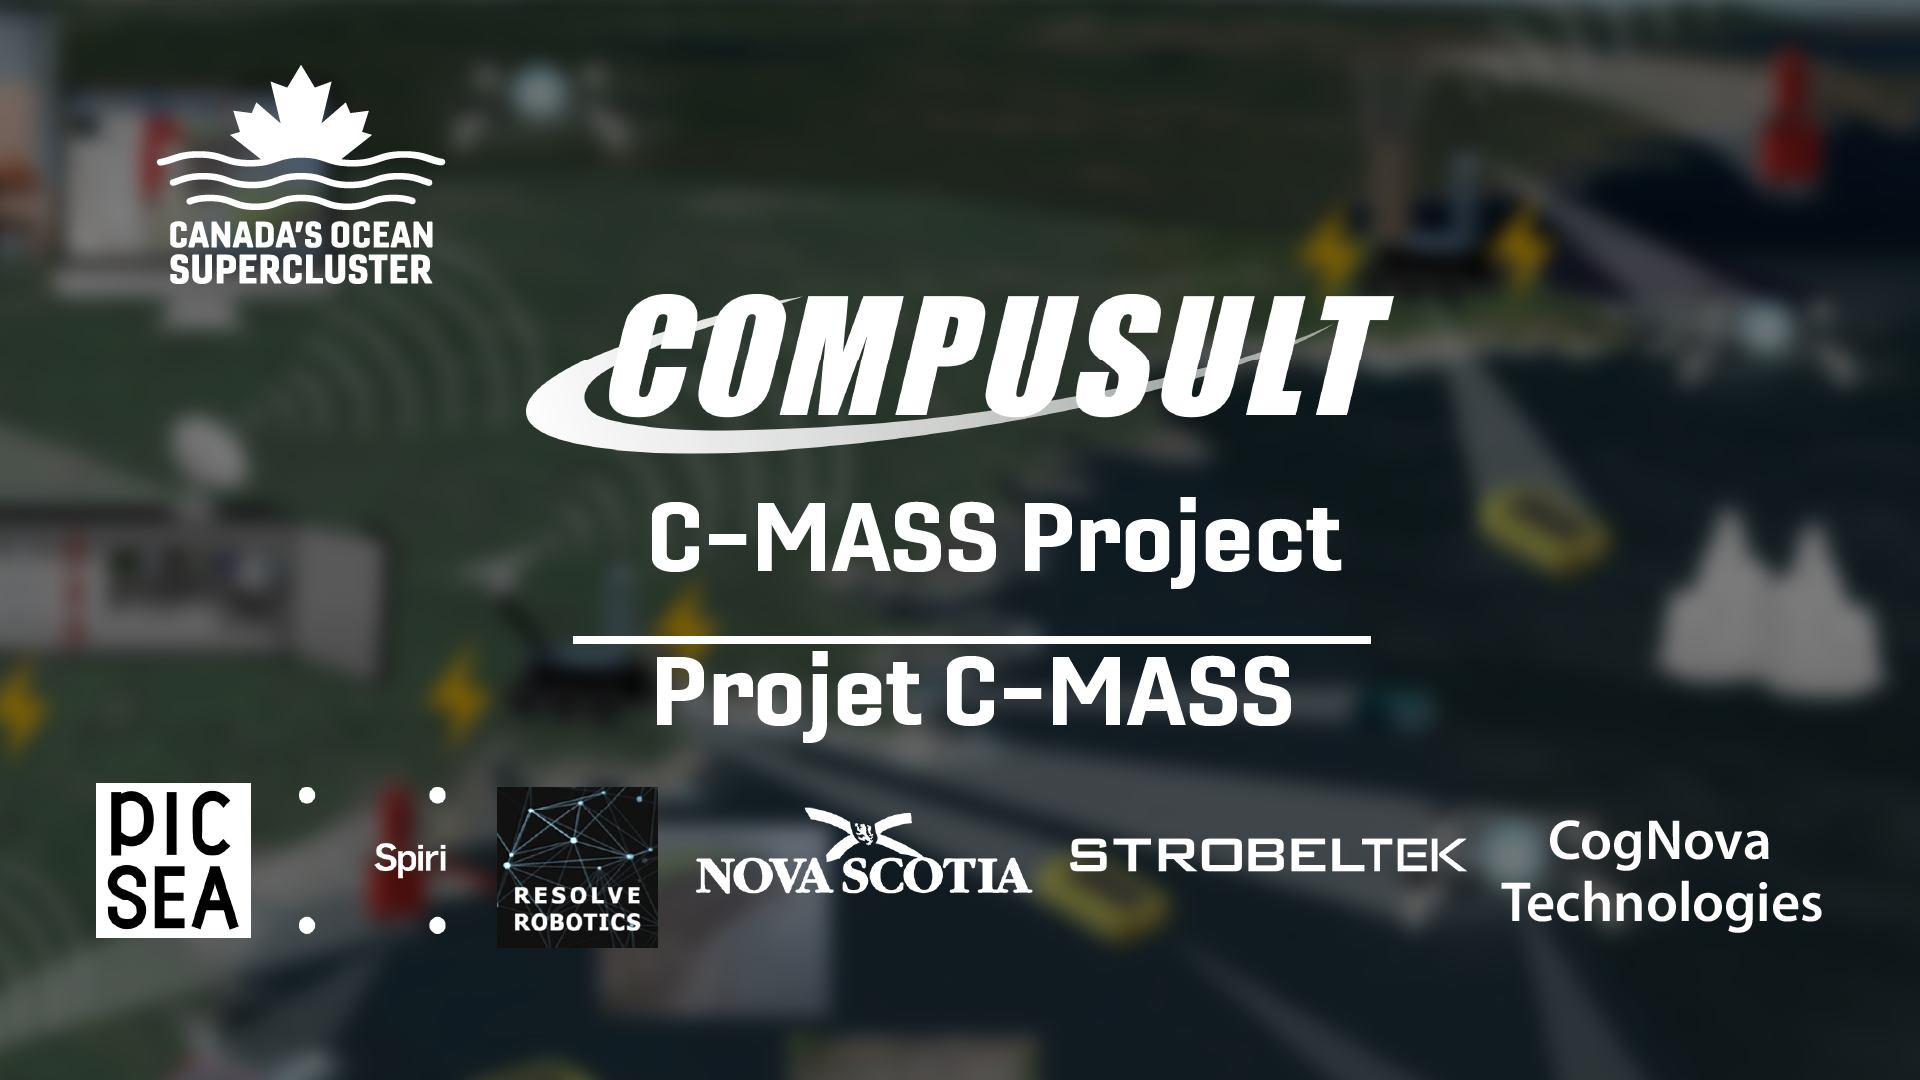 C-MASS Project